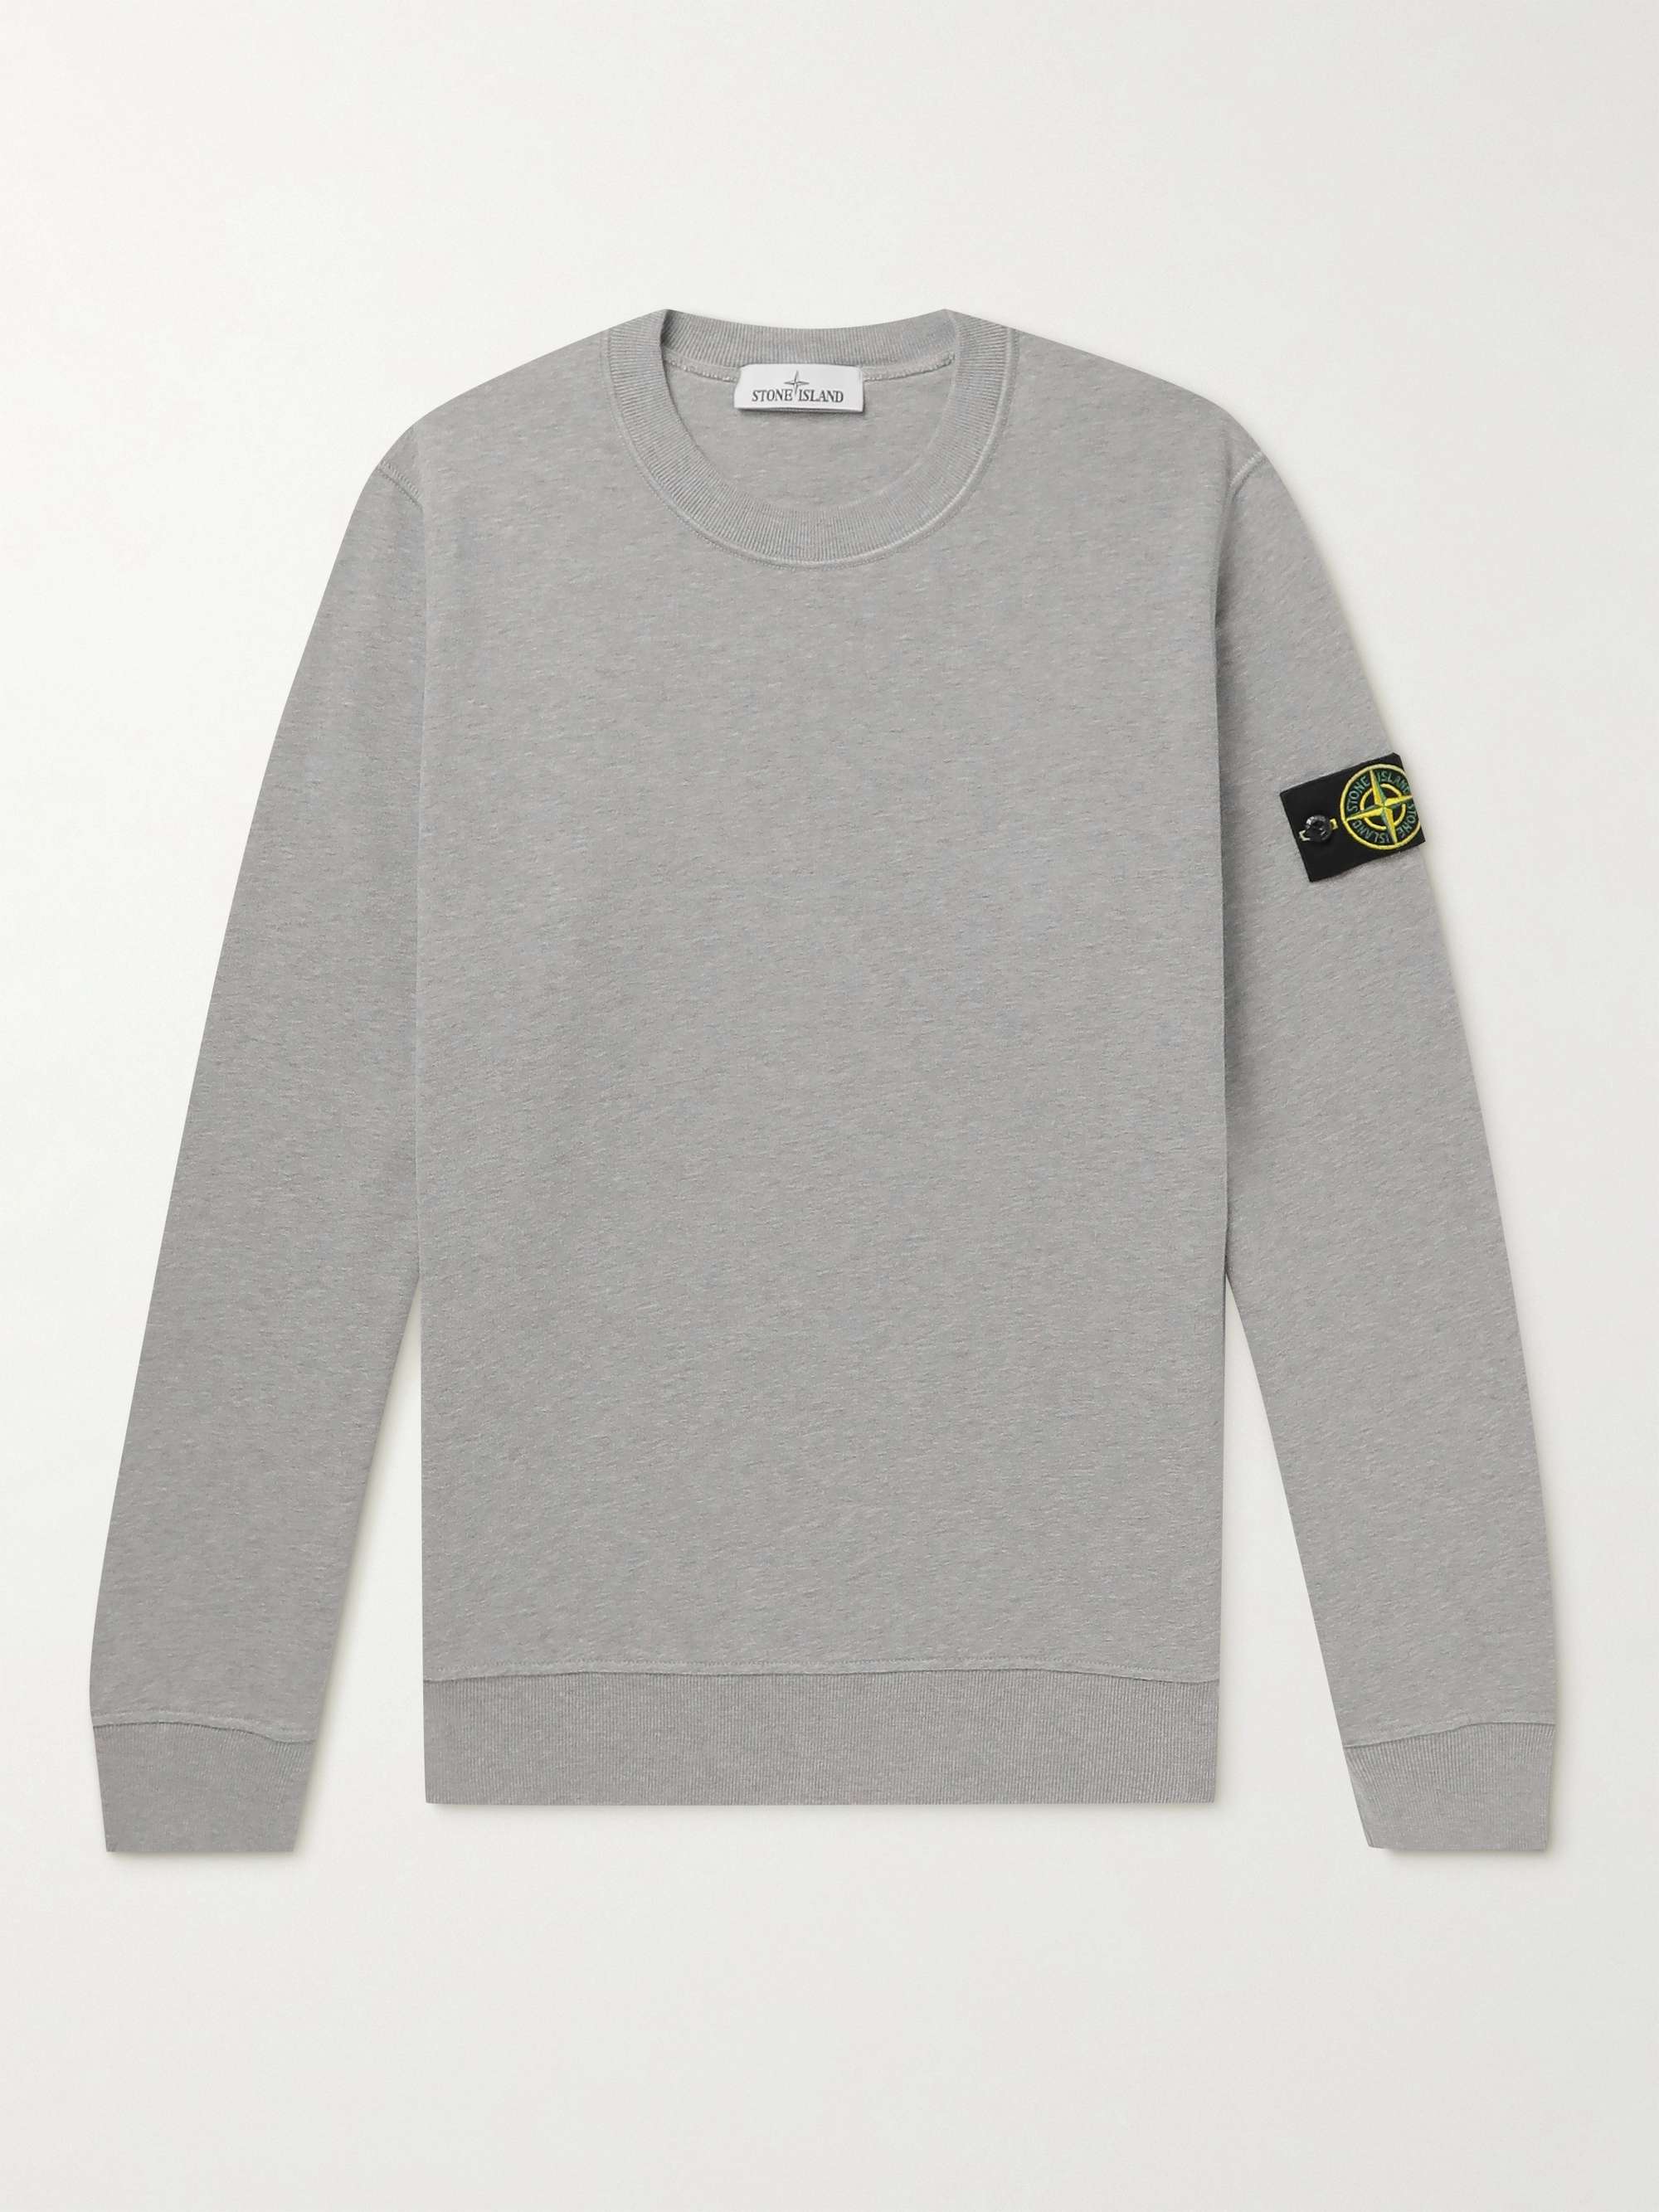 STONE ISLAND Logo-Appliquéd Cotton-Jersey Sweatshirt